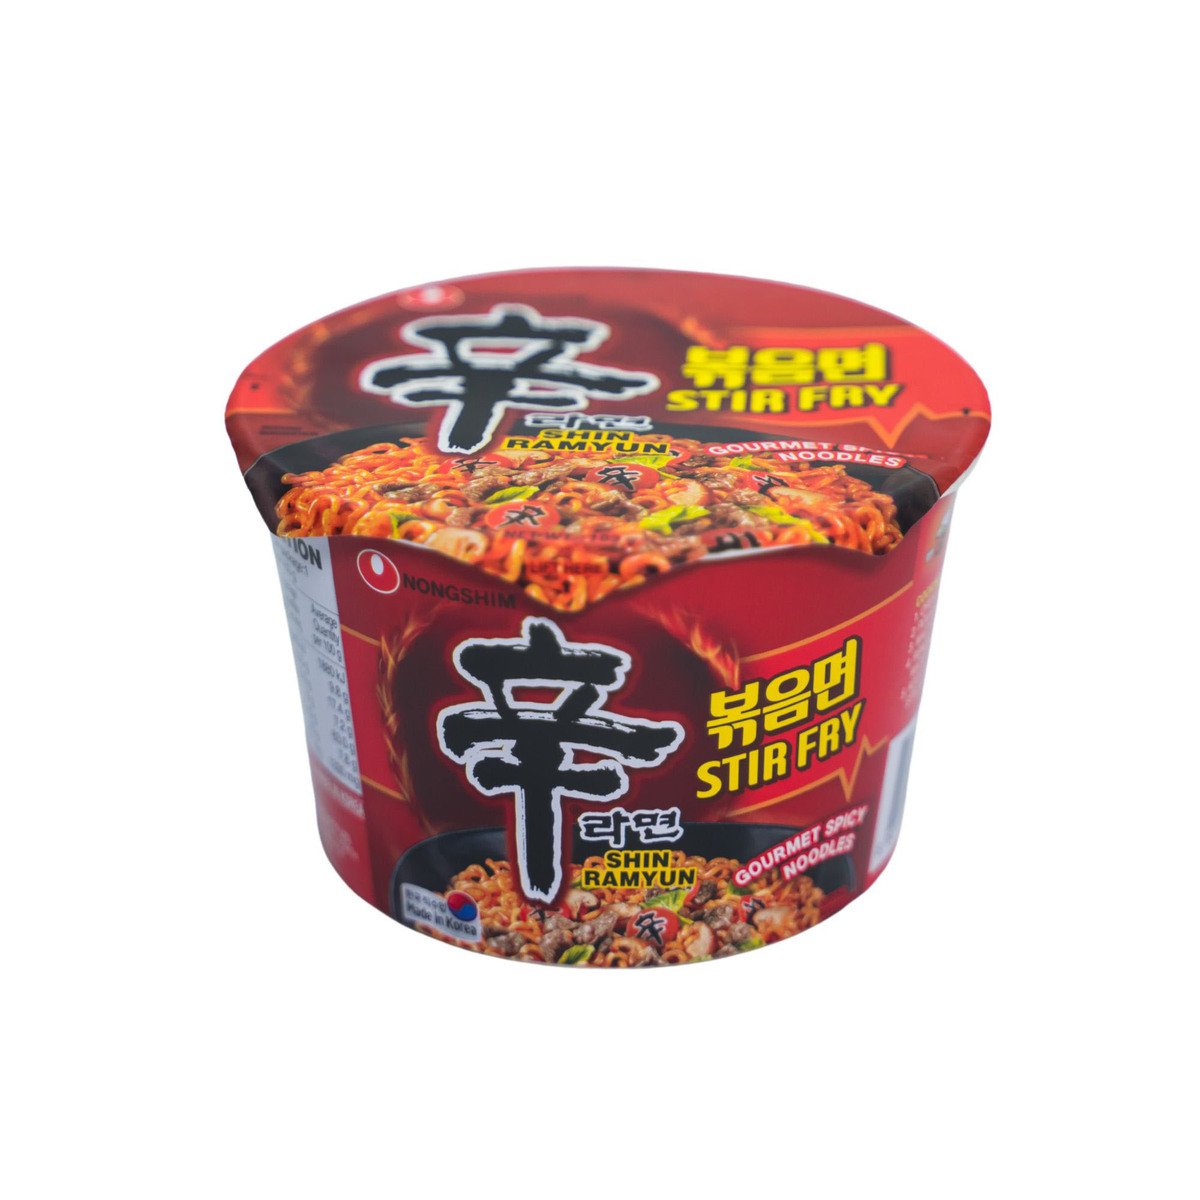 Nongshim Shin Ramyun Stir Fry Gourmet Spicy Noodles 103 g